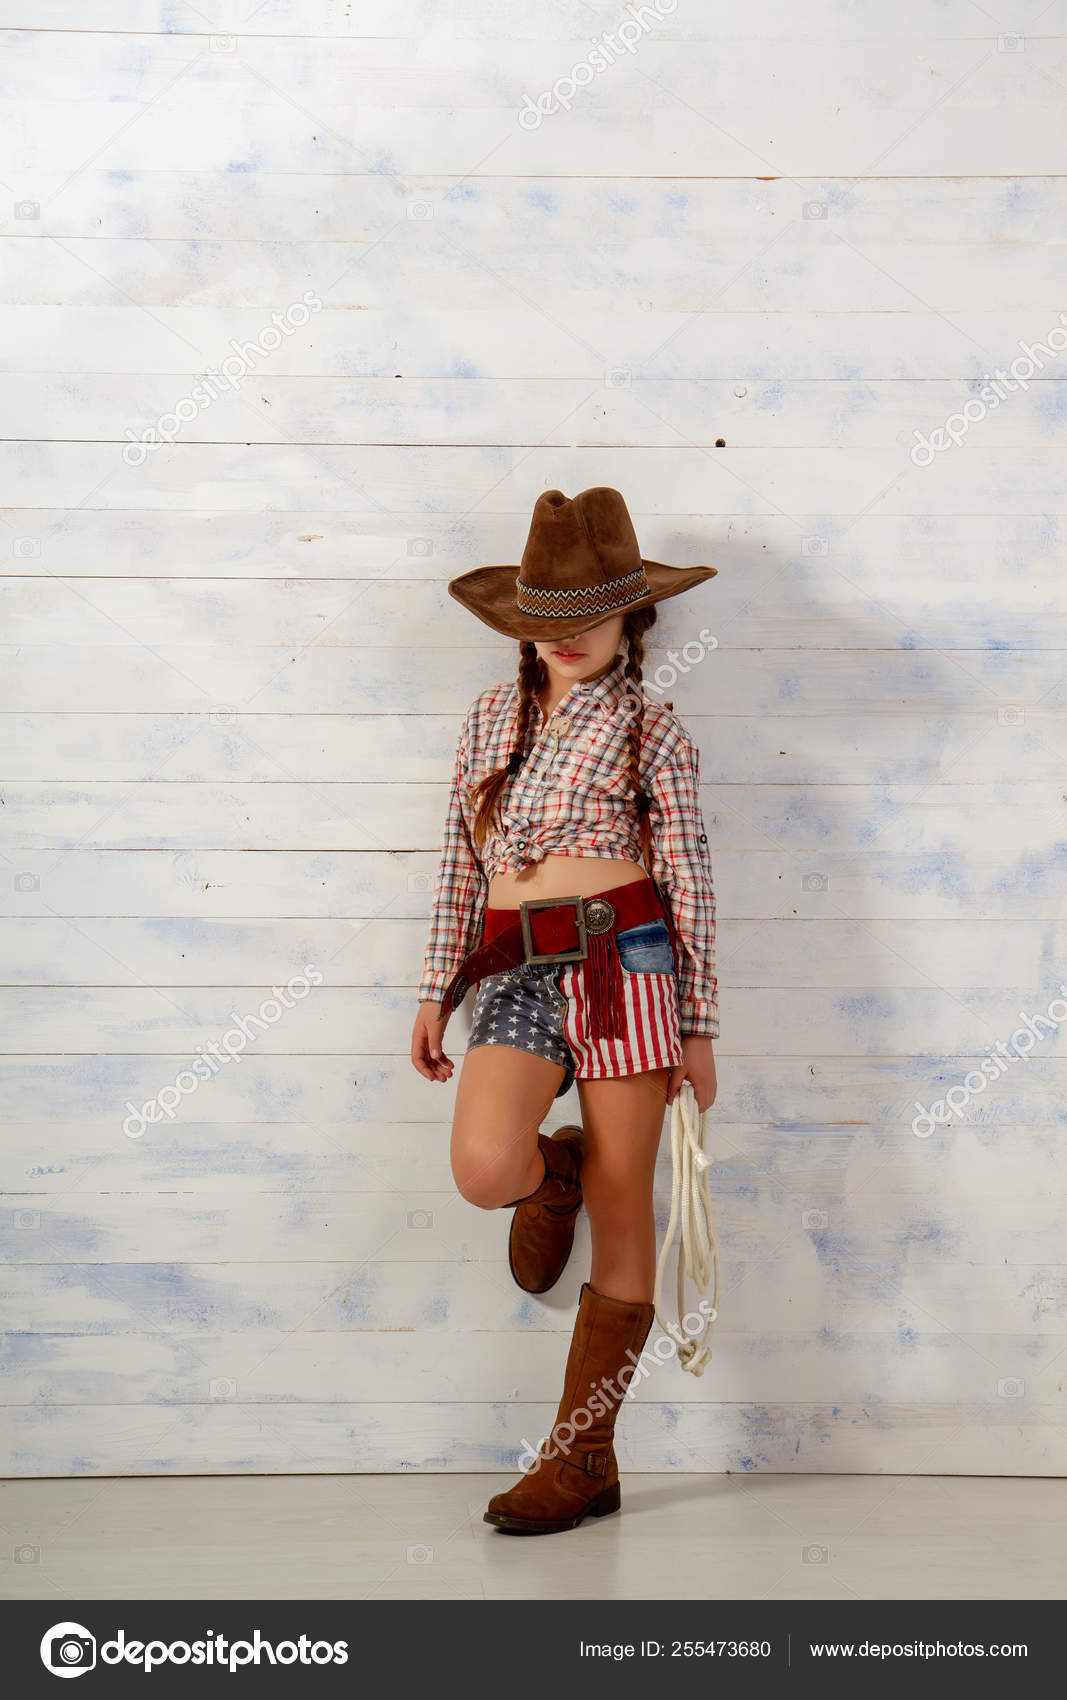 style cowboy girl